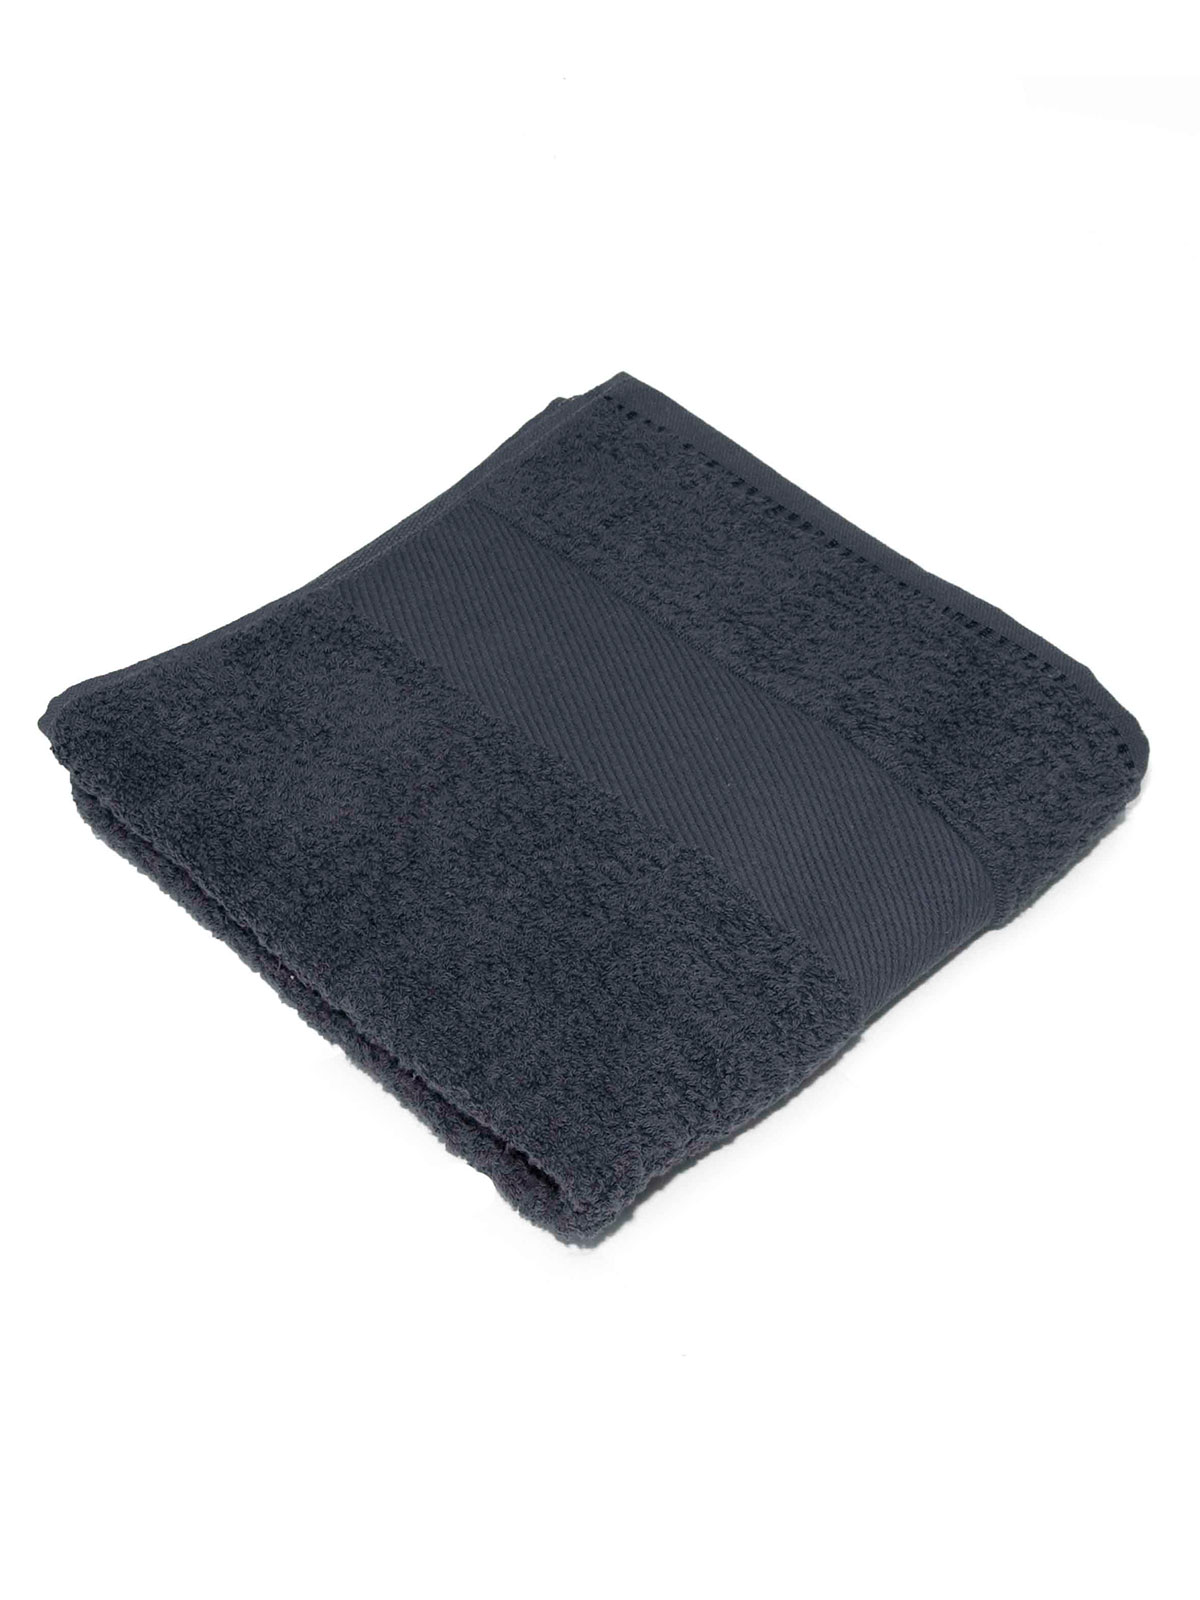 classic-towel-70x140-anthracite-grey.webp